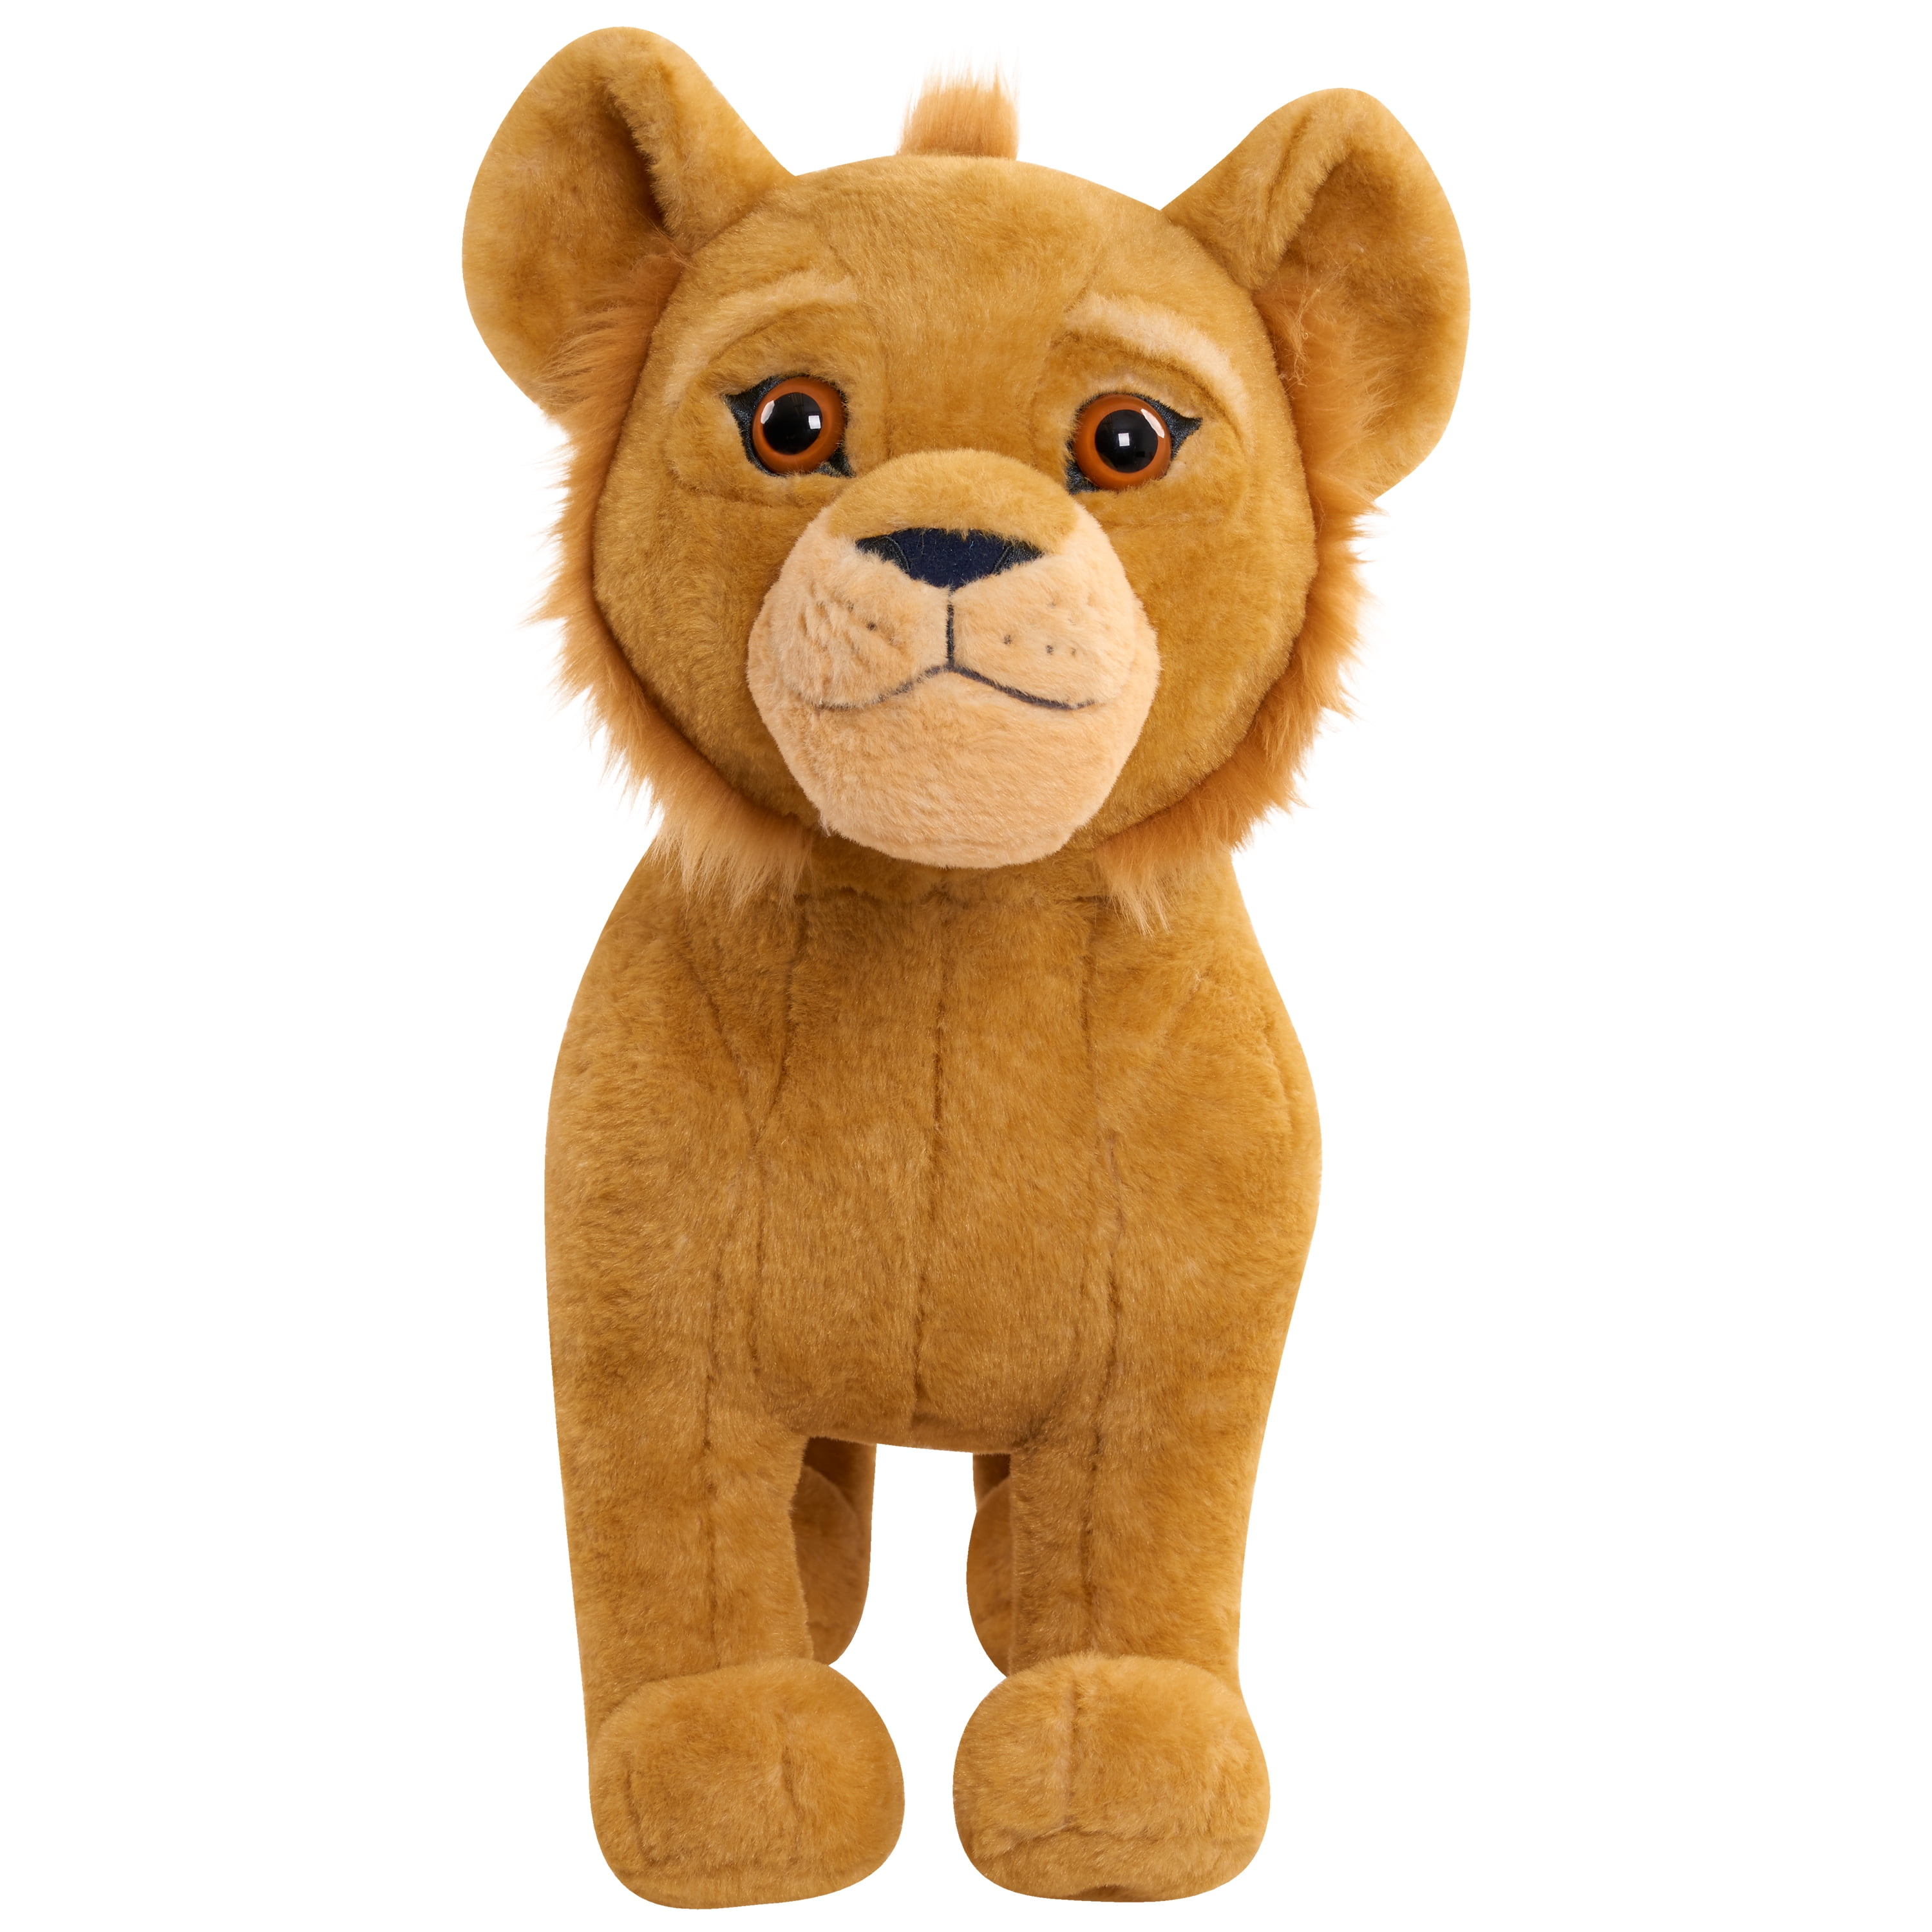 Details about   Disney Lion King’s Simba Stuffed Animal 